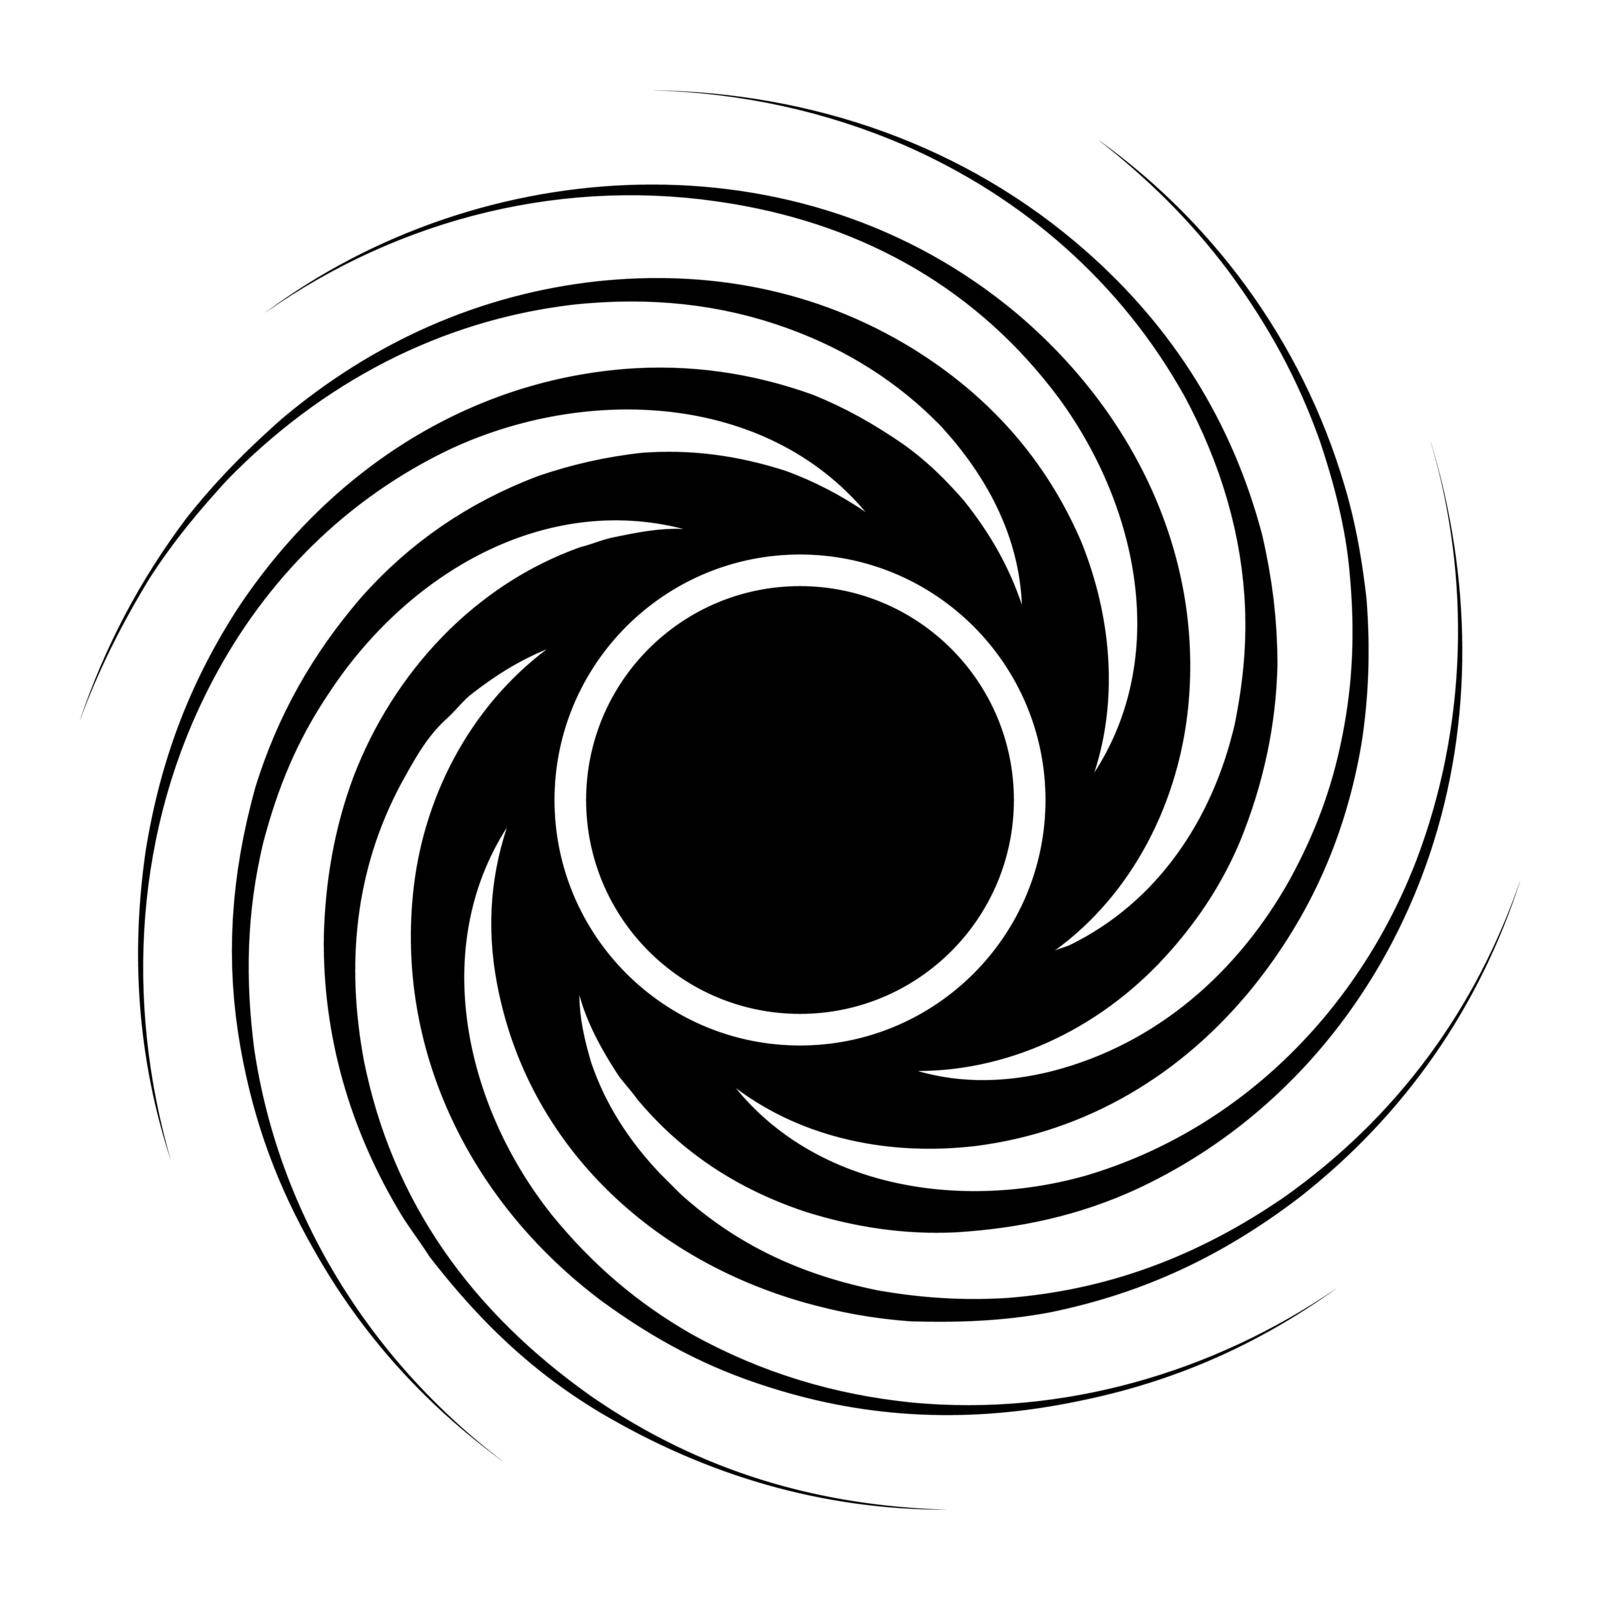 Black hole spiral shape vortex portal icon black color vector illustration flat style image by serhii435